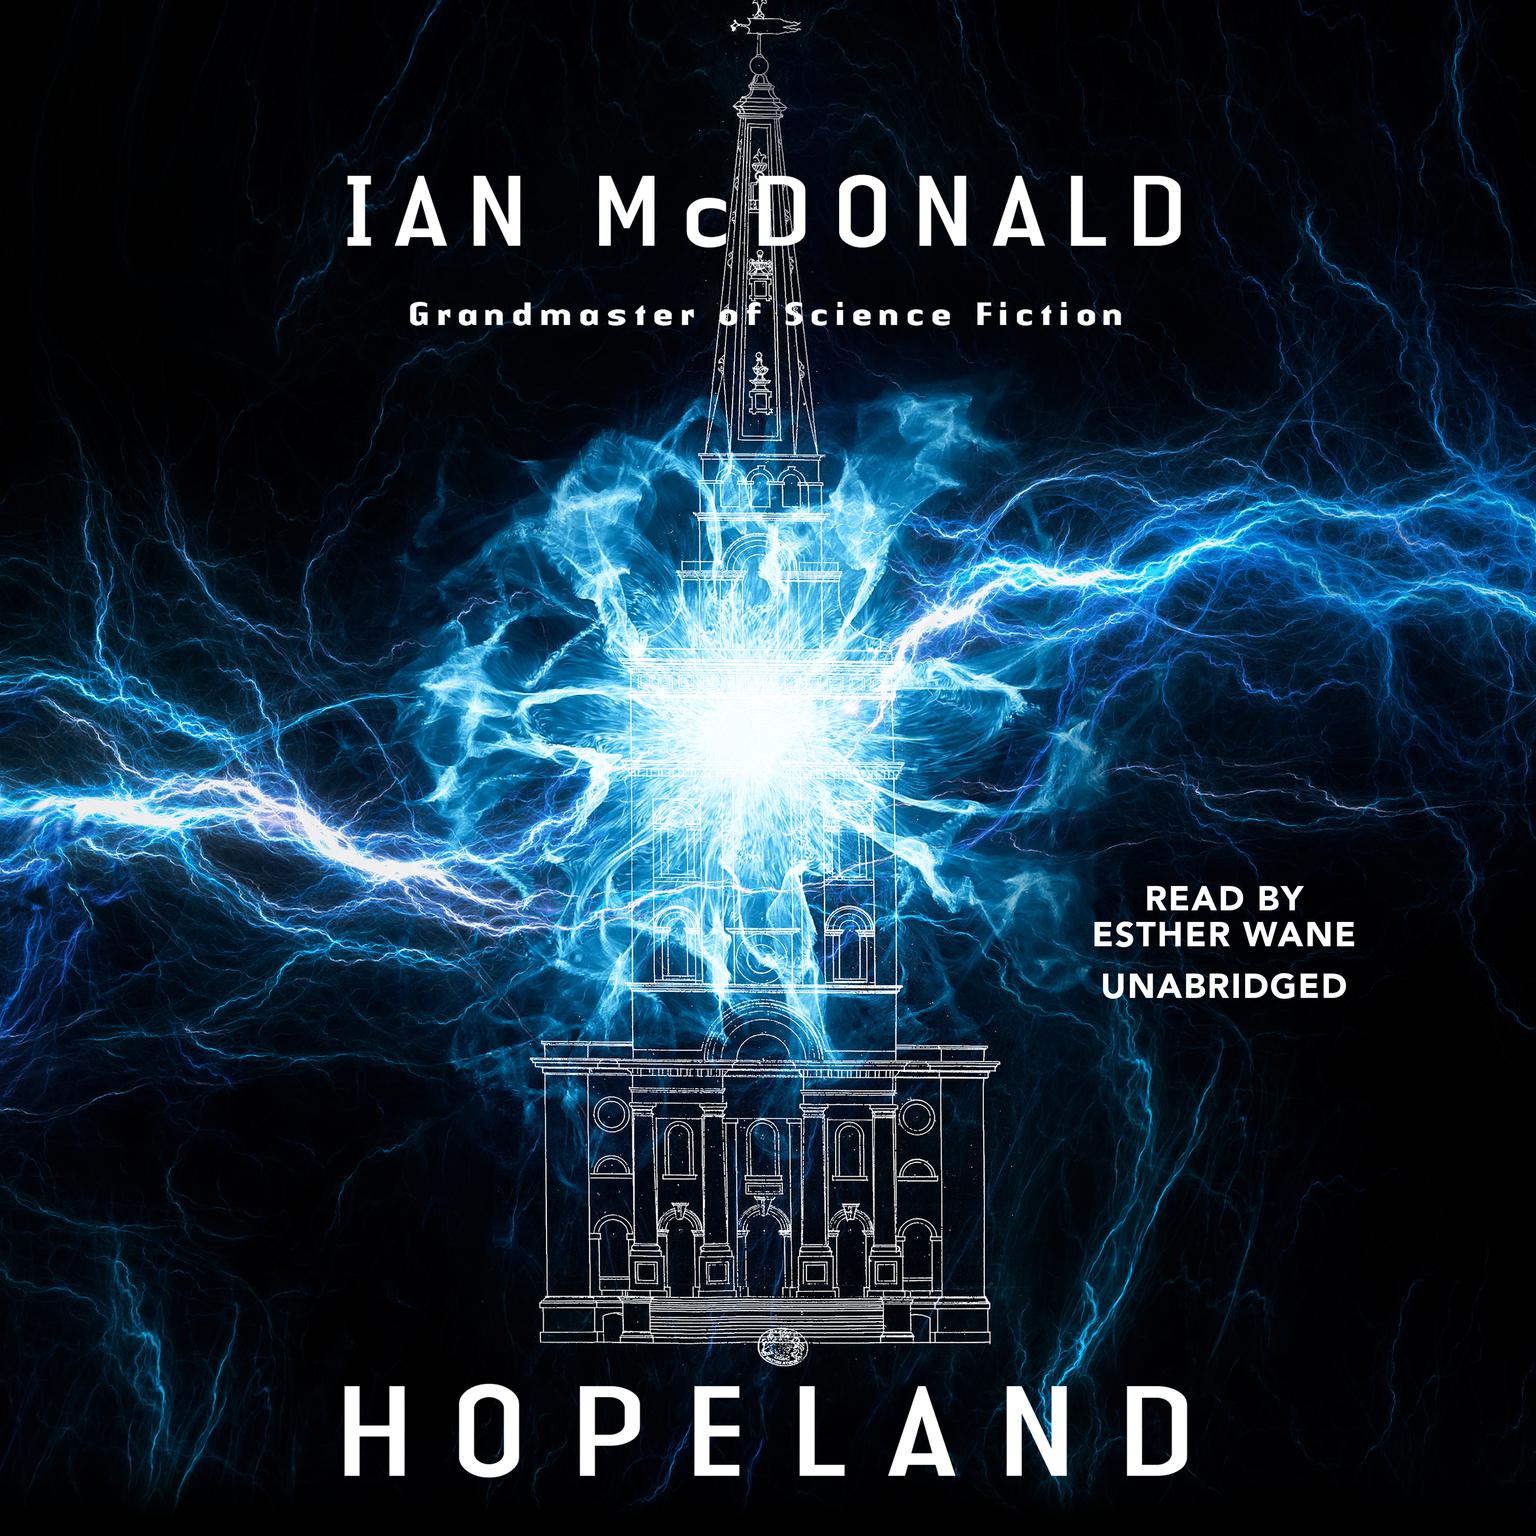 Hopeland Audiobook, by Ian McDonald